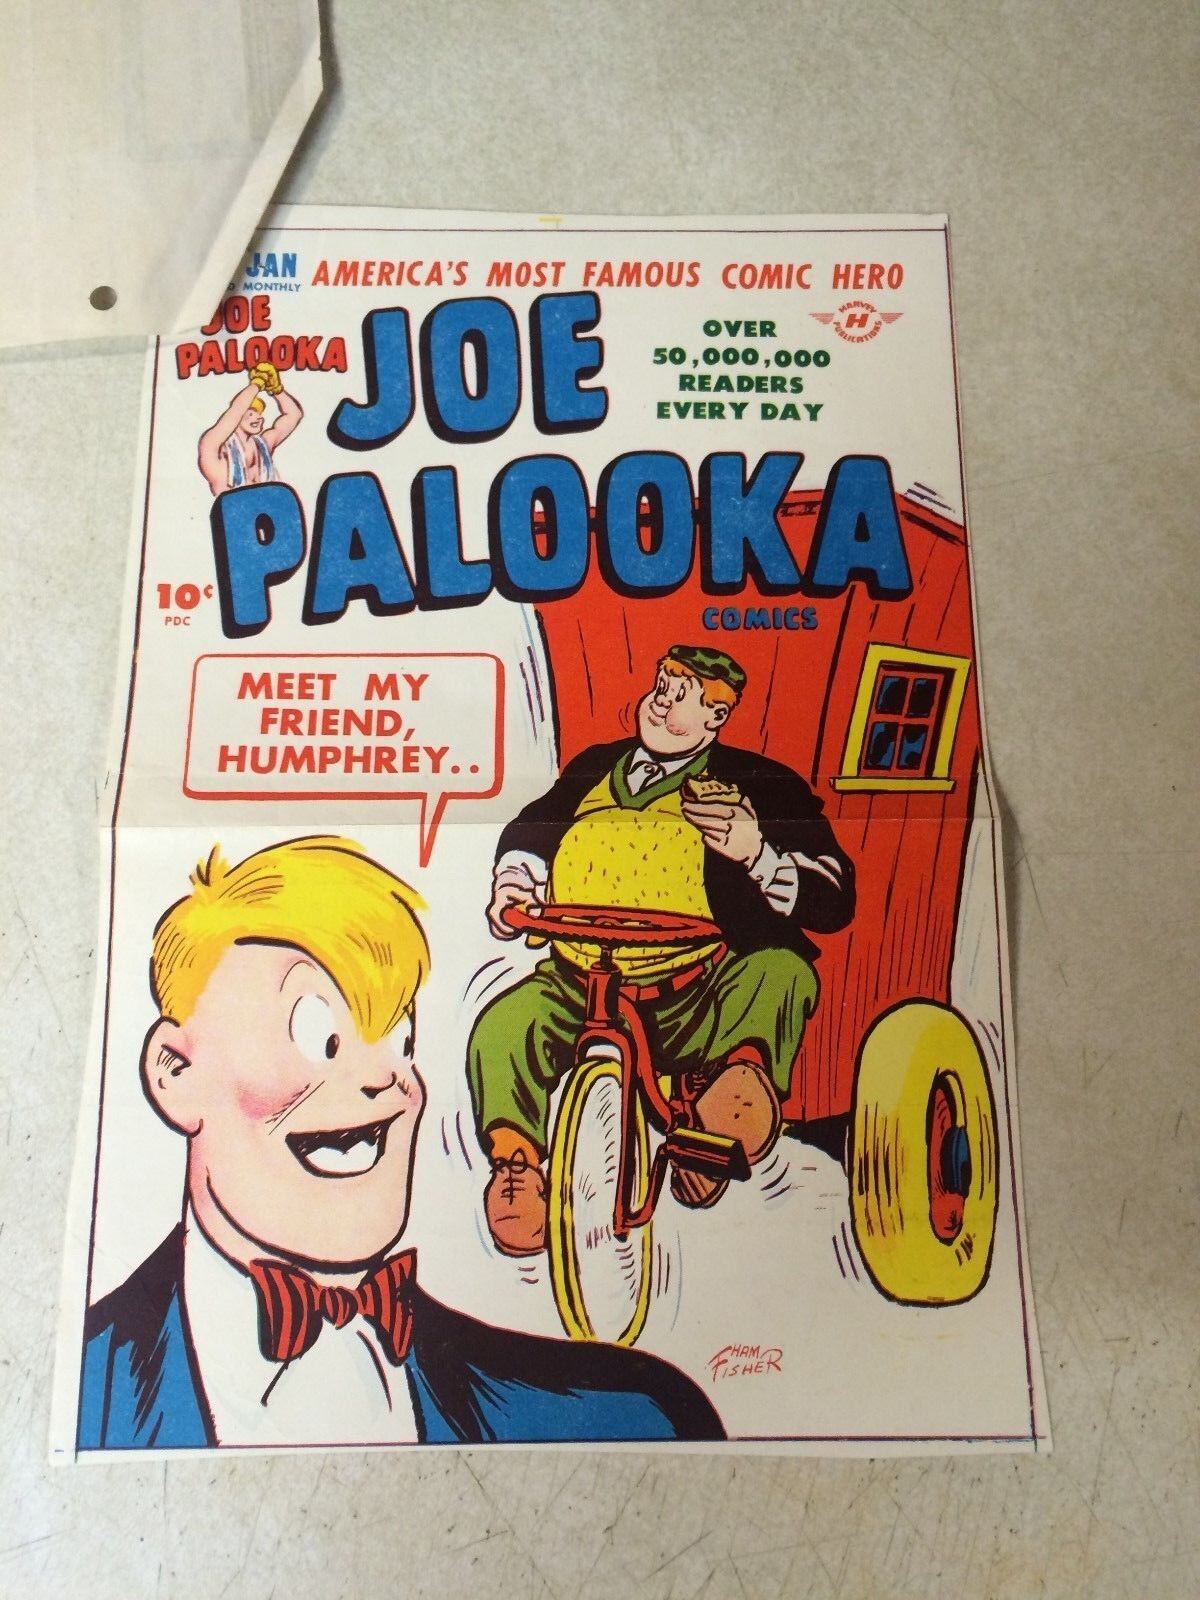 JOE PALOOKA #16 COVER ART original cover proof 1947 w/PRINTER INVOICE - HUMPHREY